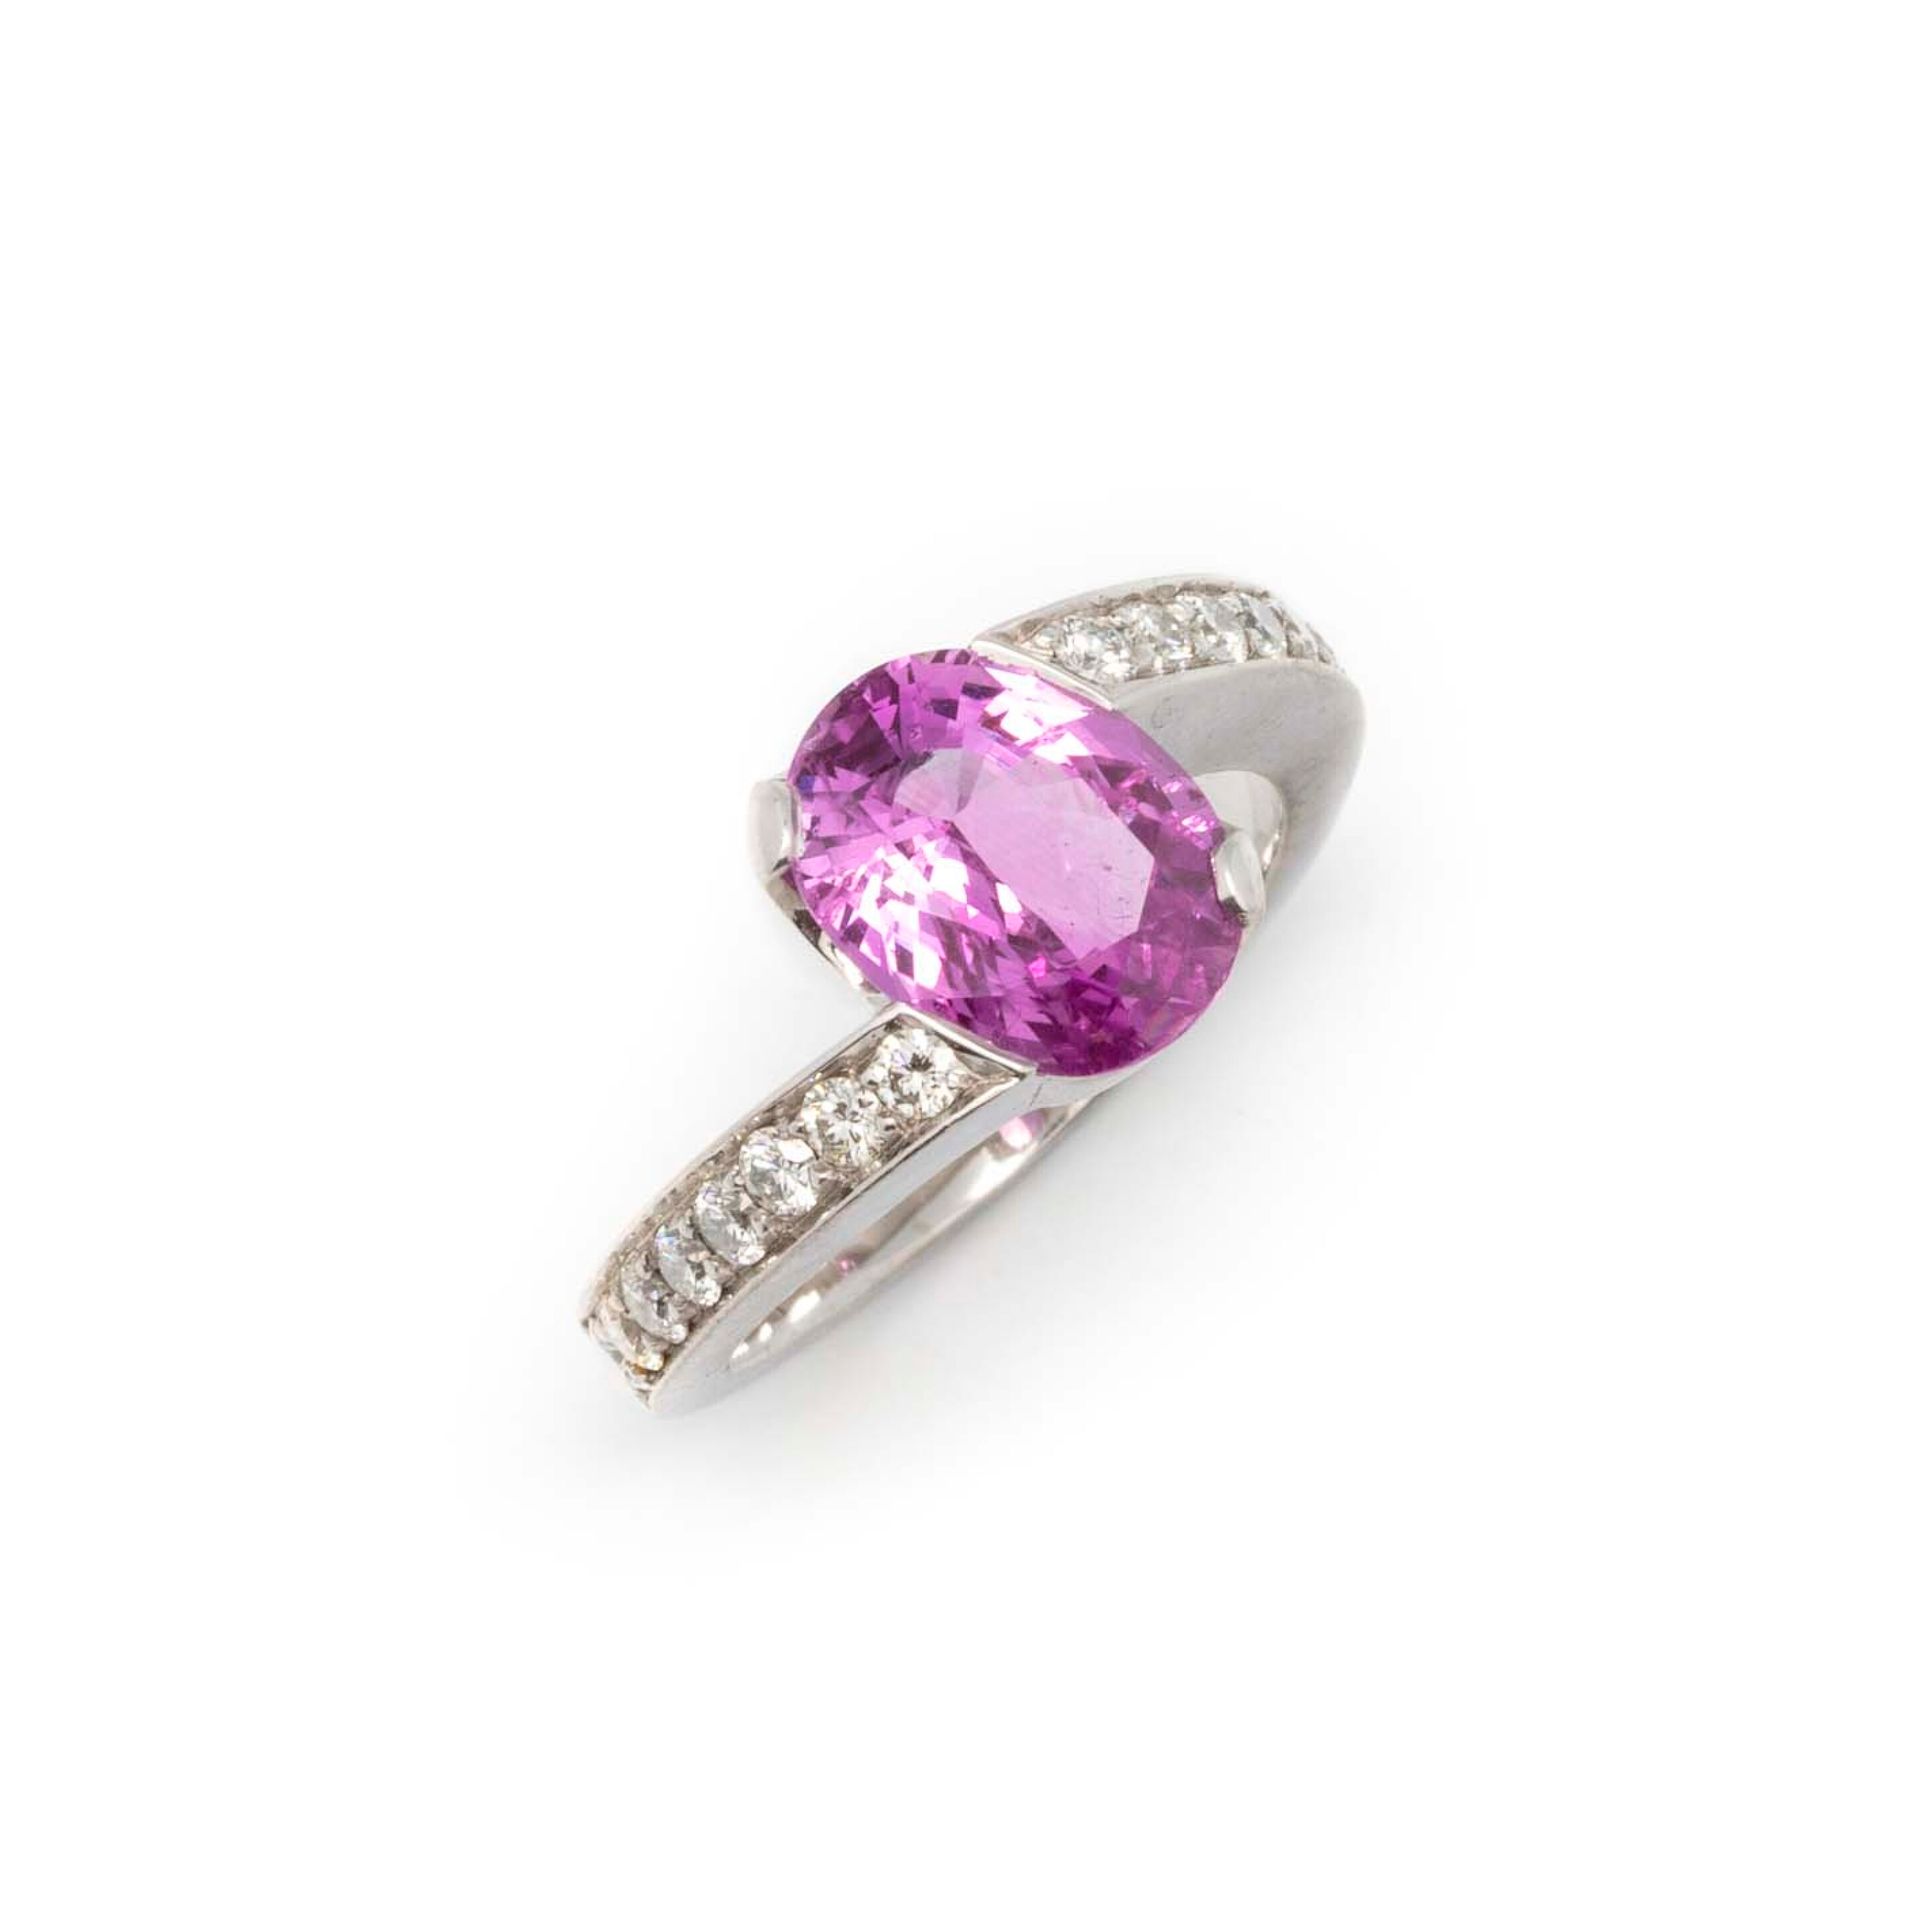 Null 镶嵌着一颗粉色蓝宝石的白金戒指，重3.5克拉，戒指上镶嵌着小钻石

TDD : 53

毛重：9.5克。